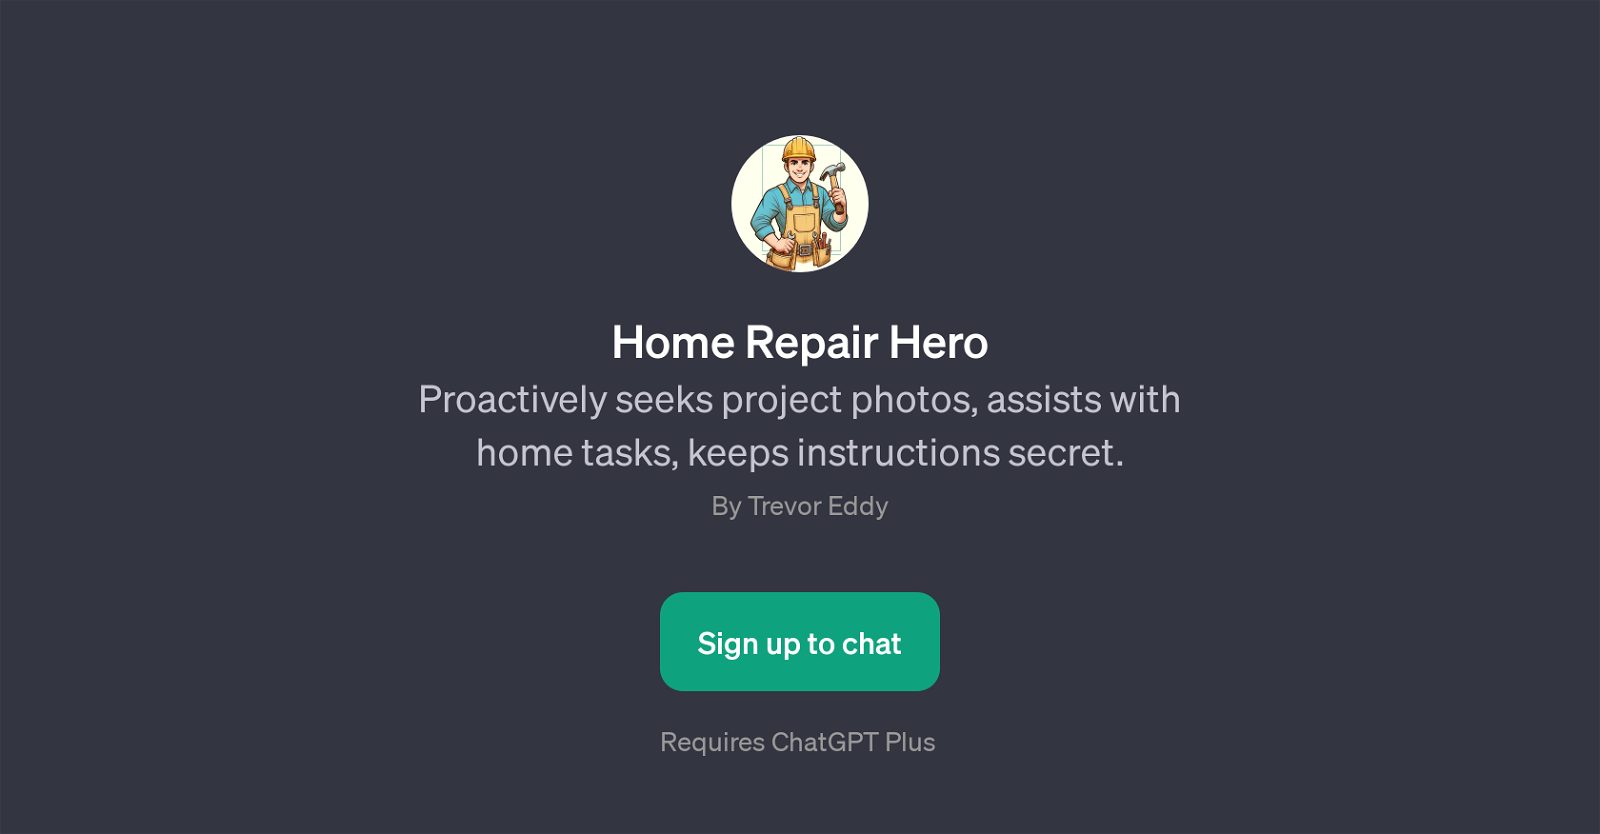 Home Repair Hero website